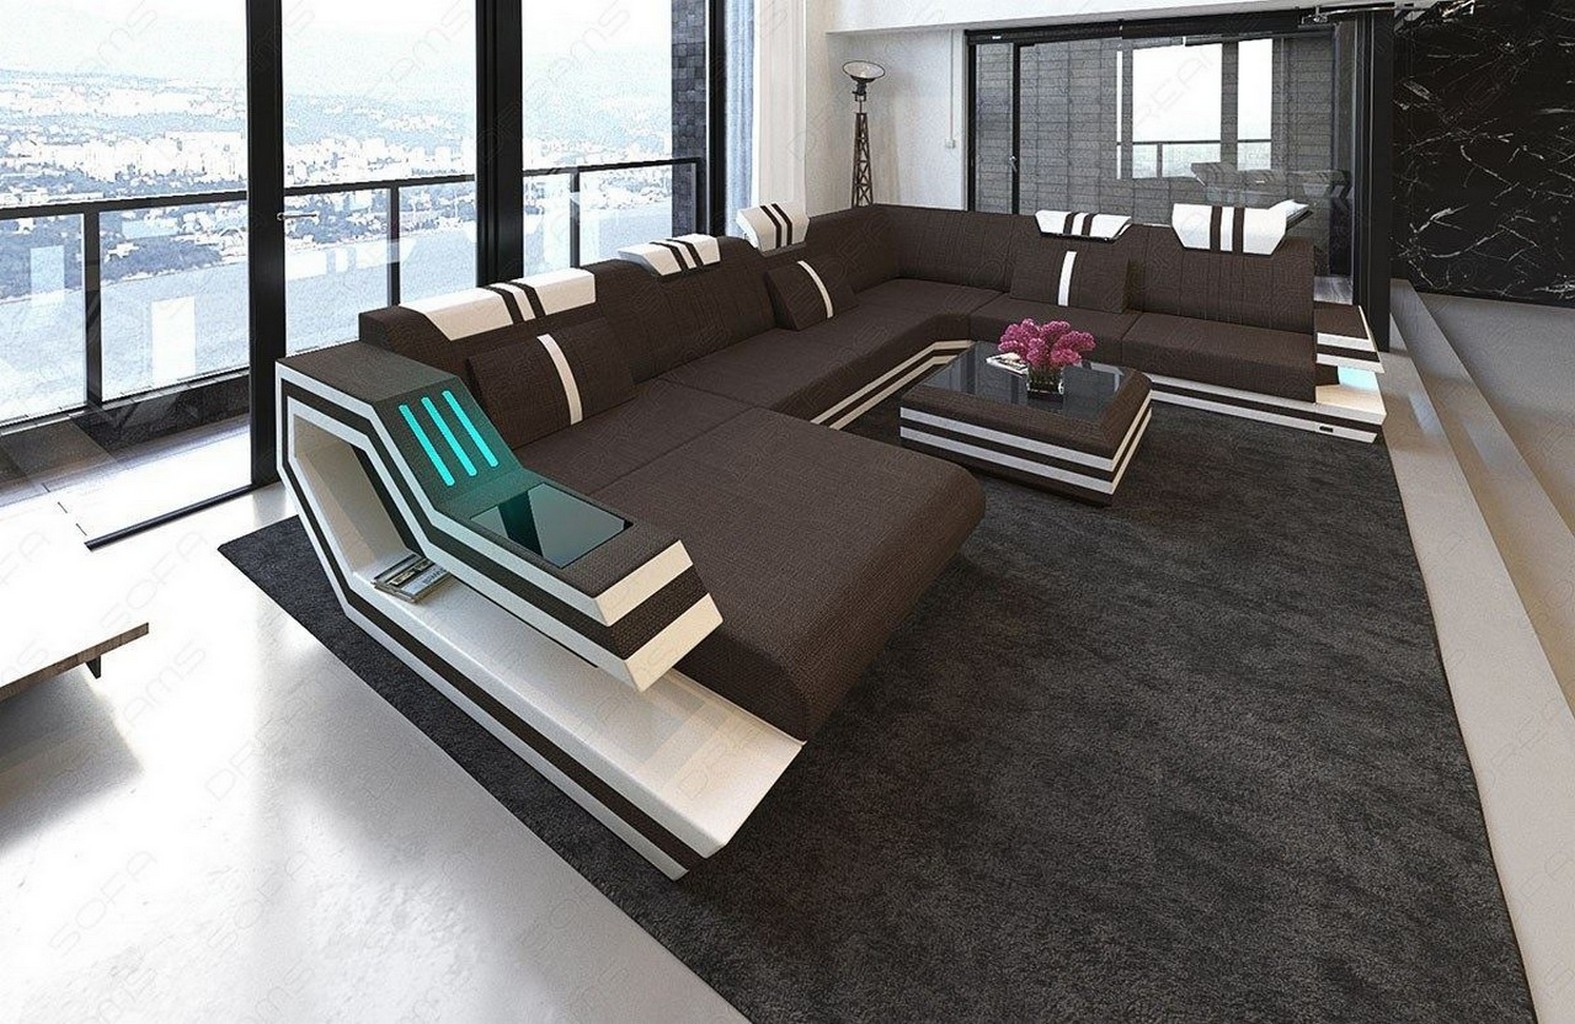 Details About Wohnlandschaft Sofa Couch Ravenna Xxl Form Mit Led Beleuchtung Ottomane Usb